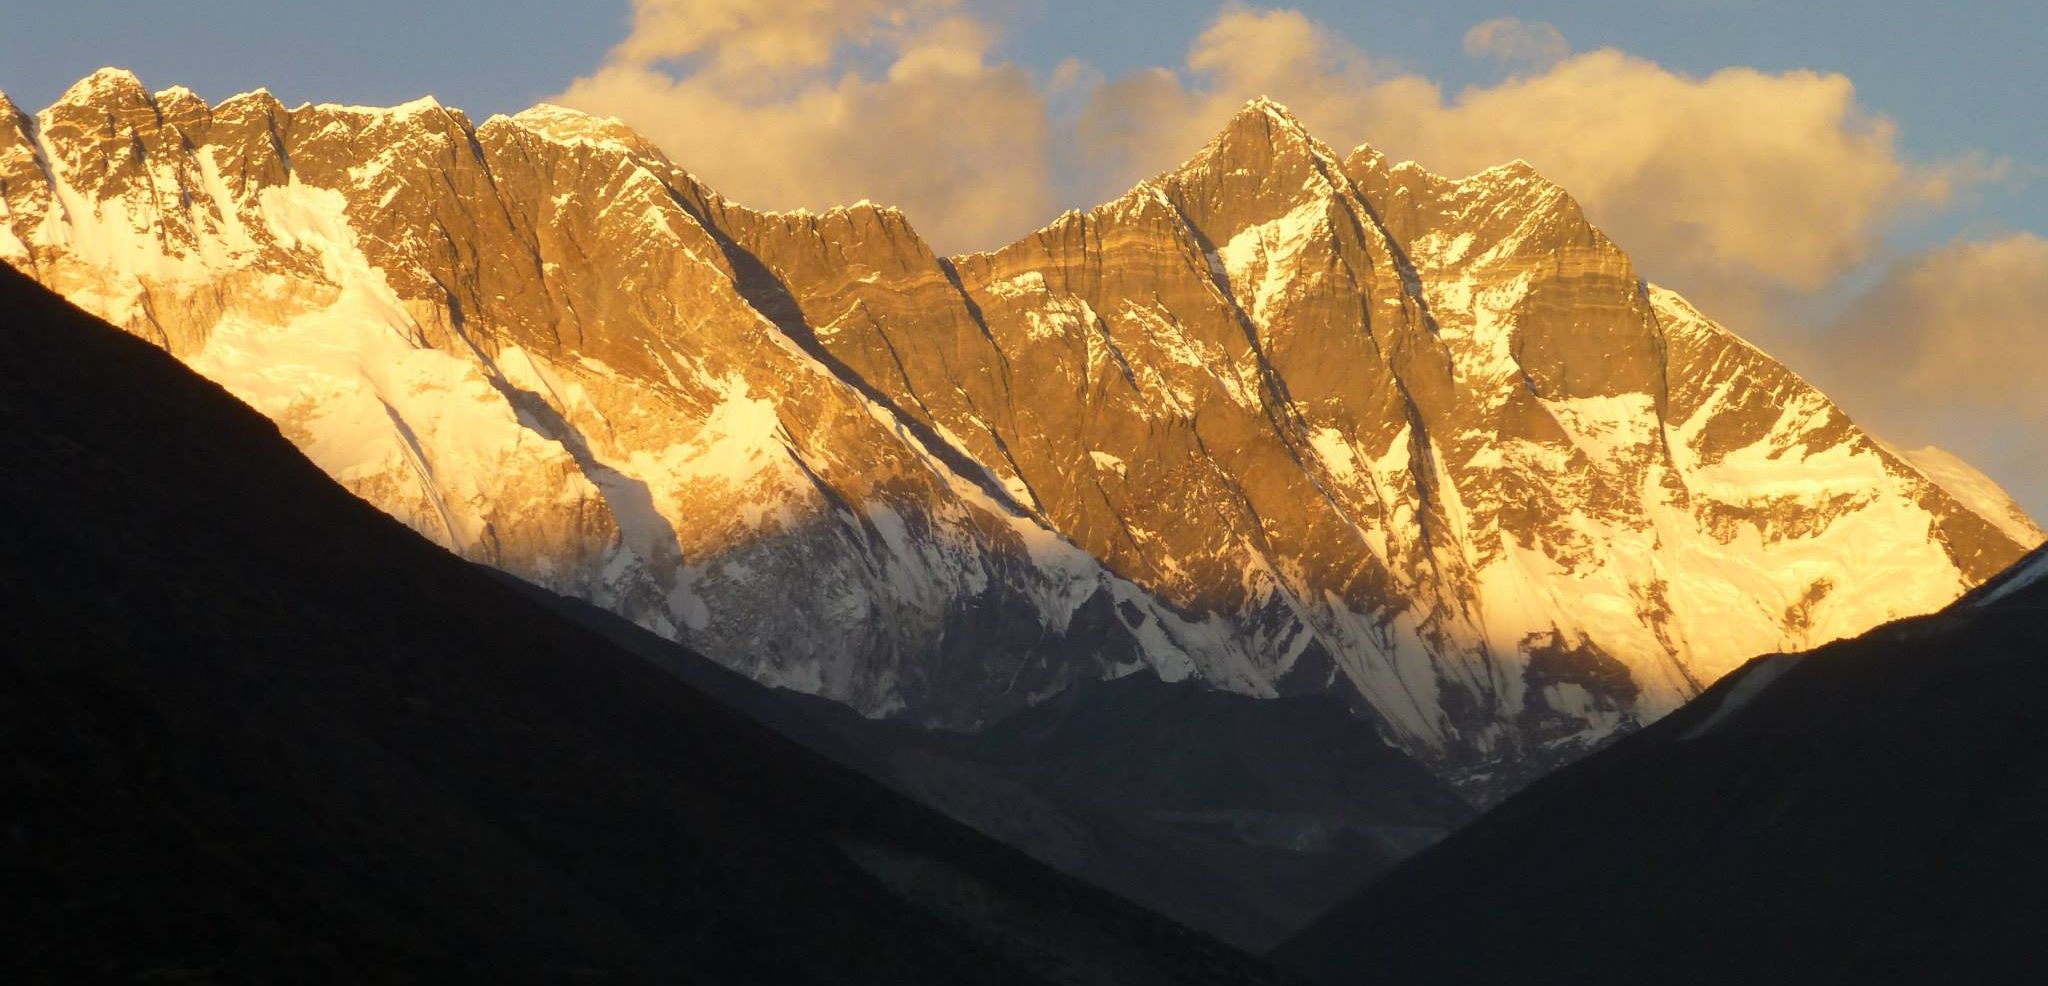 Sunset on the Nuptse-Lhotse Wall